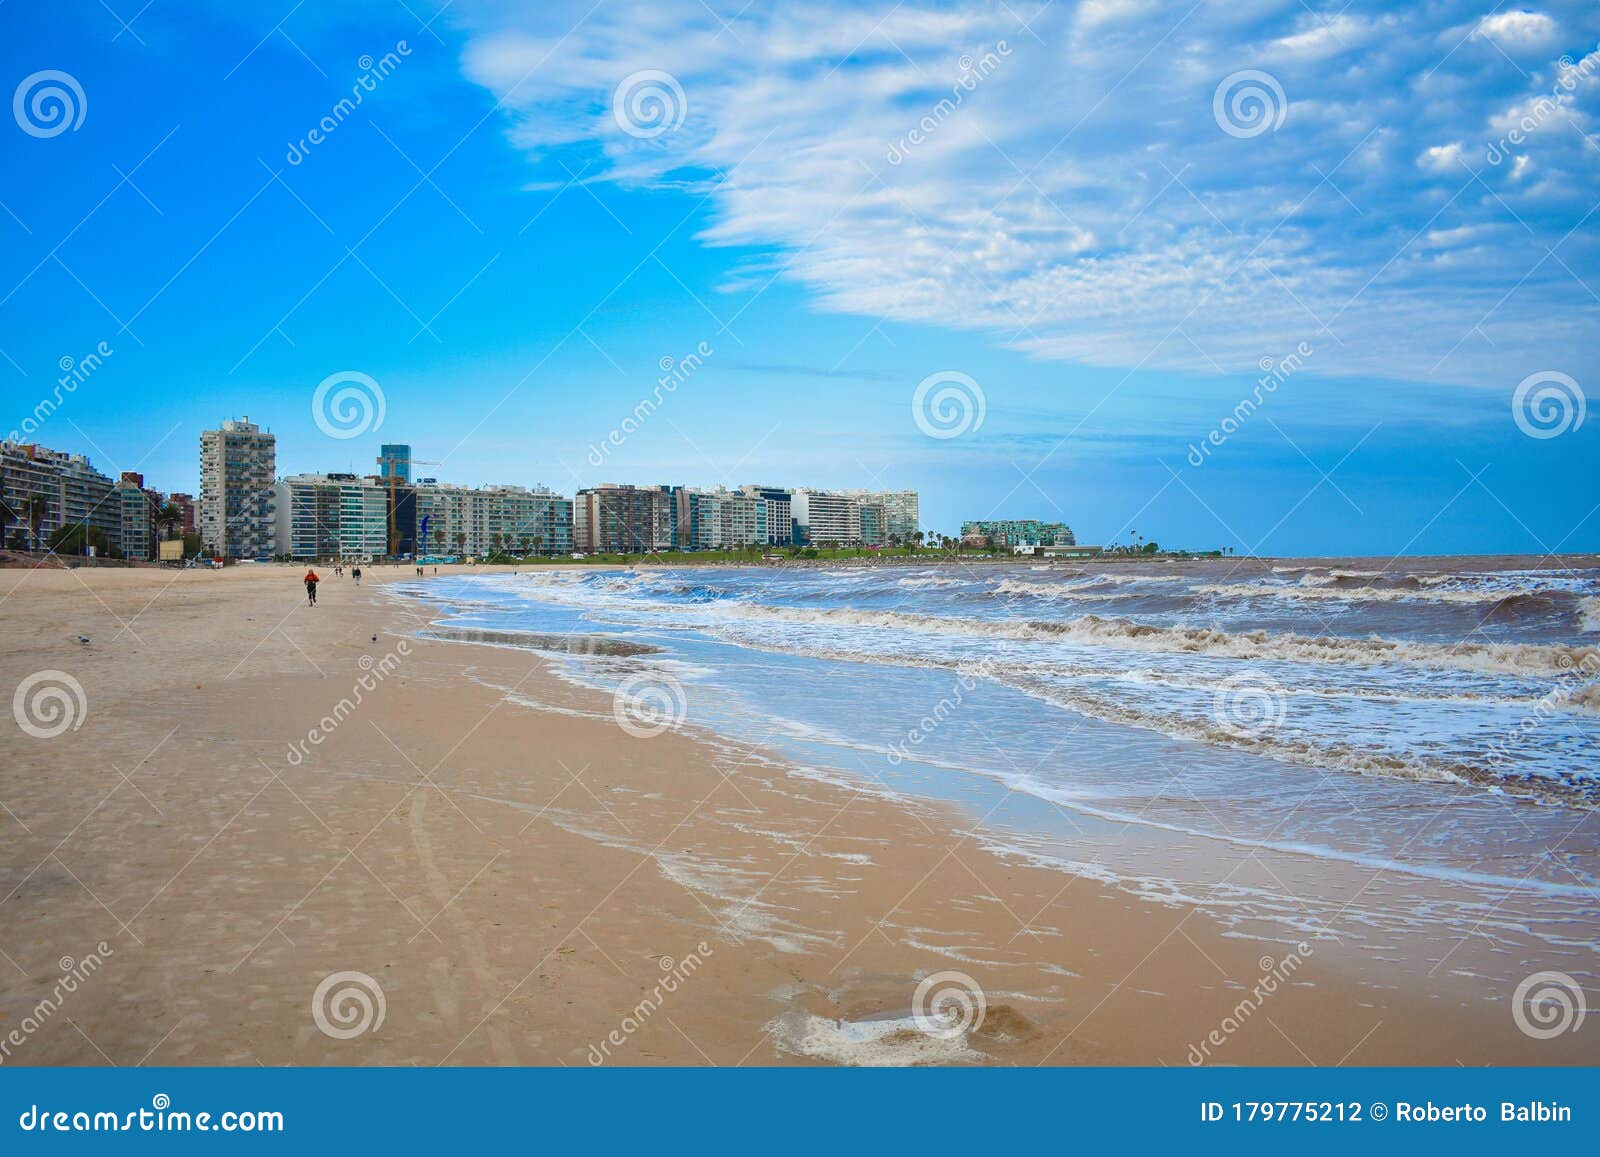 the beautiful pocitos beach, montevideo, uruguay